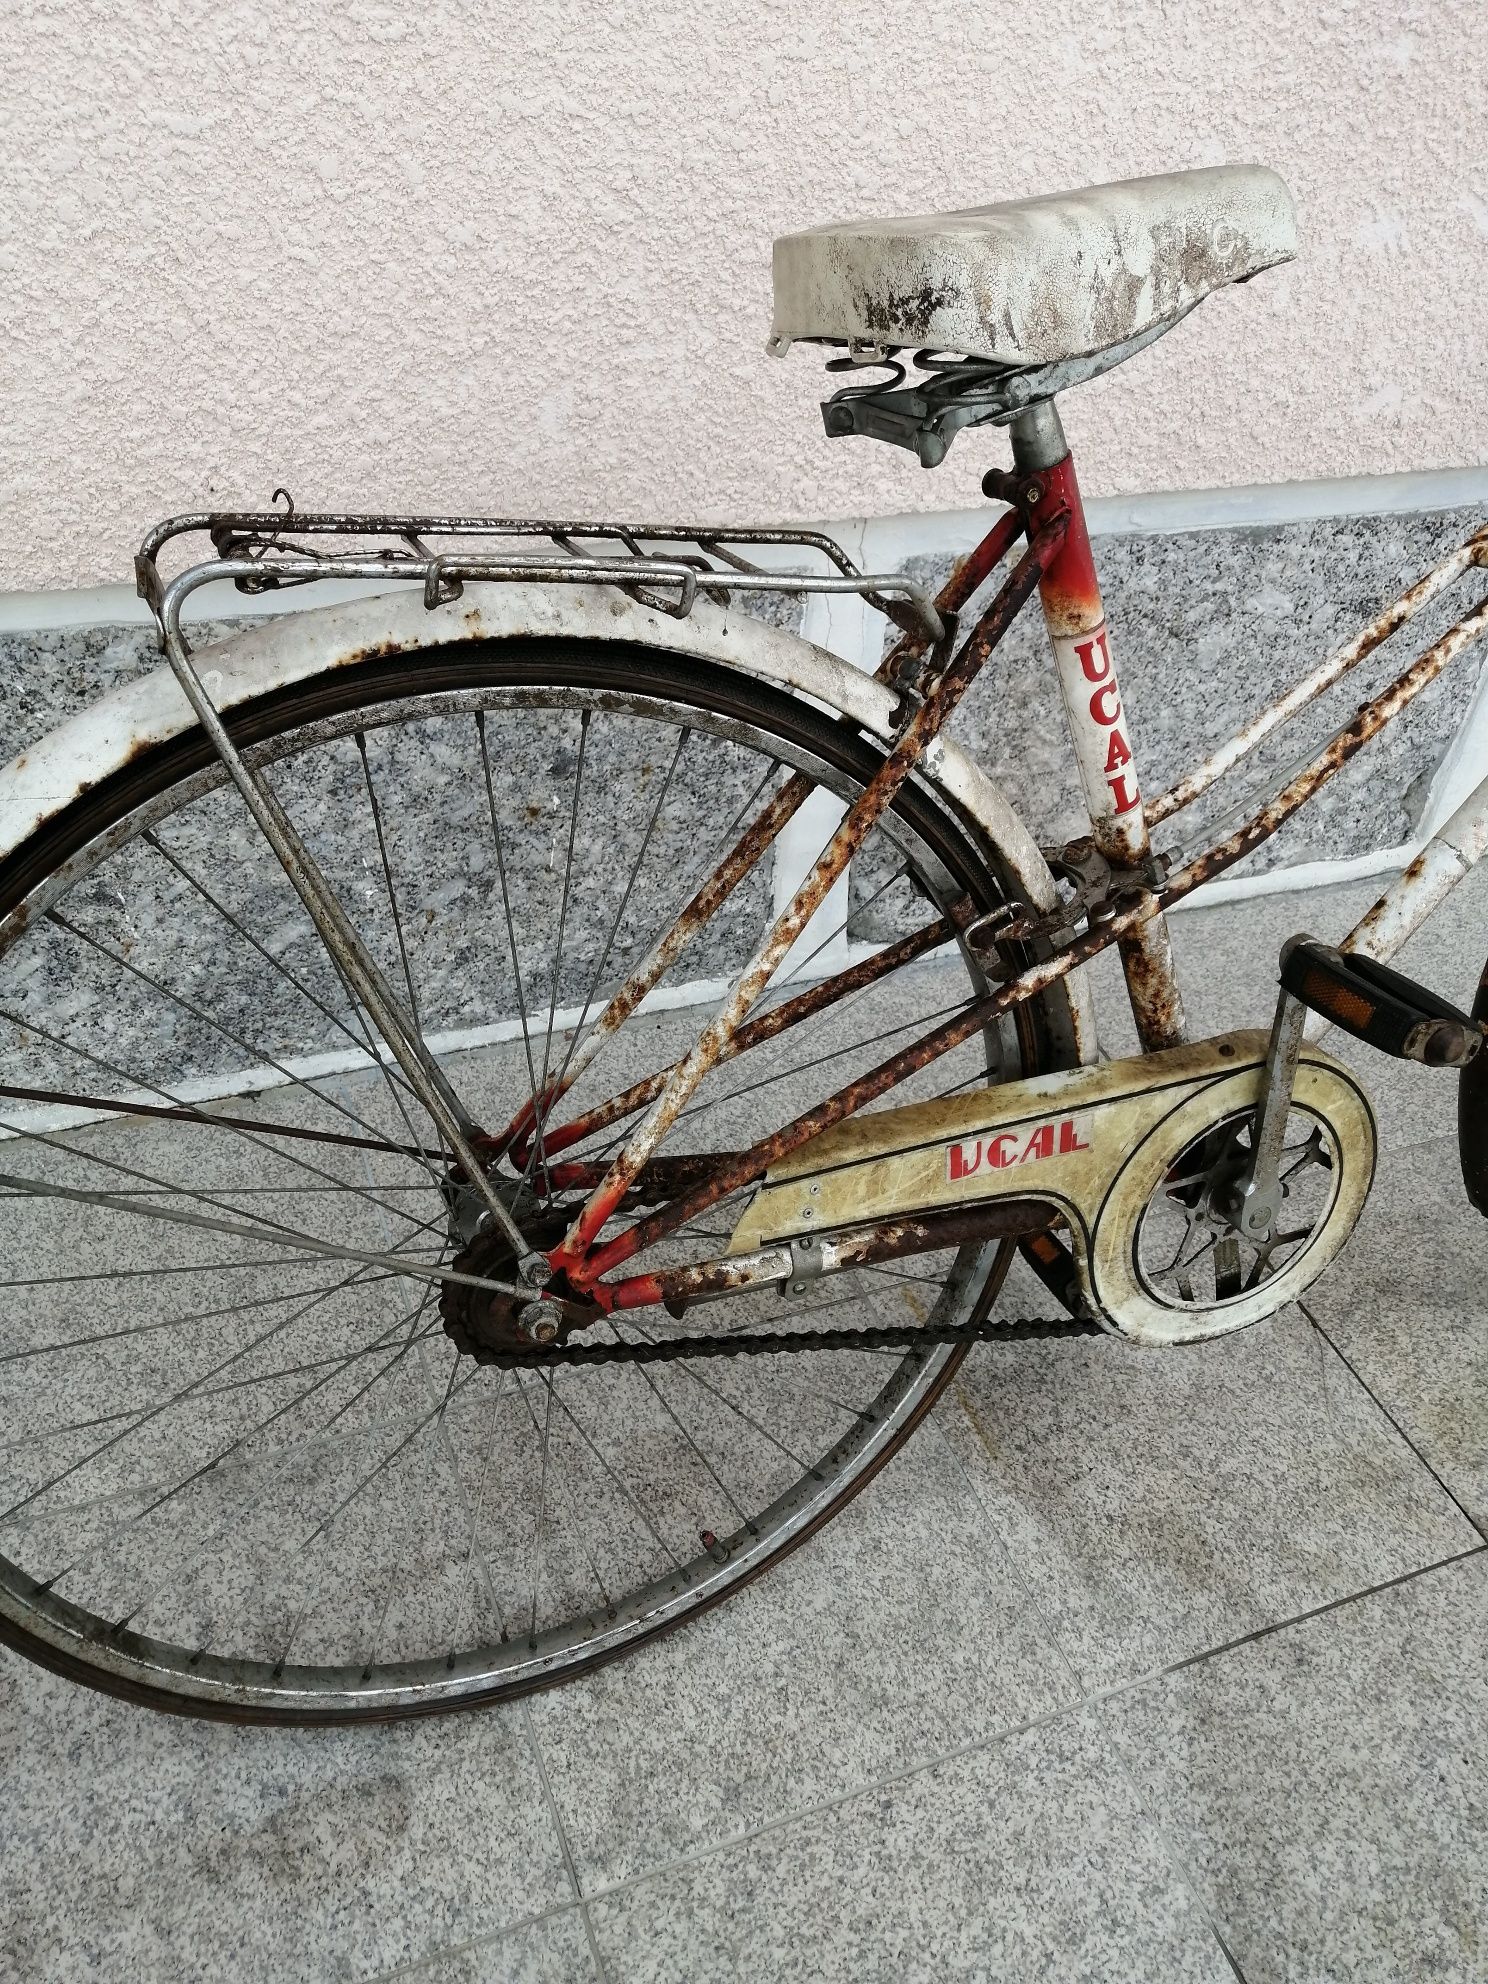 Bicicleta Ucal (Águeda)